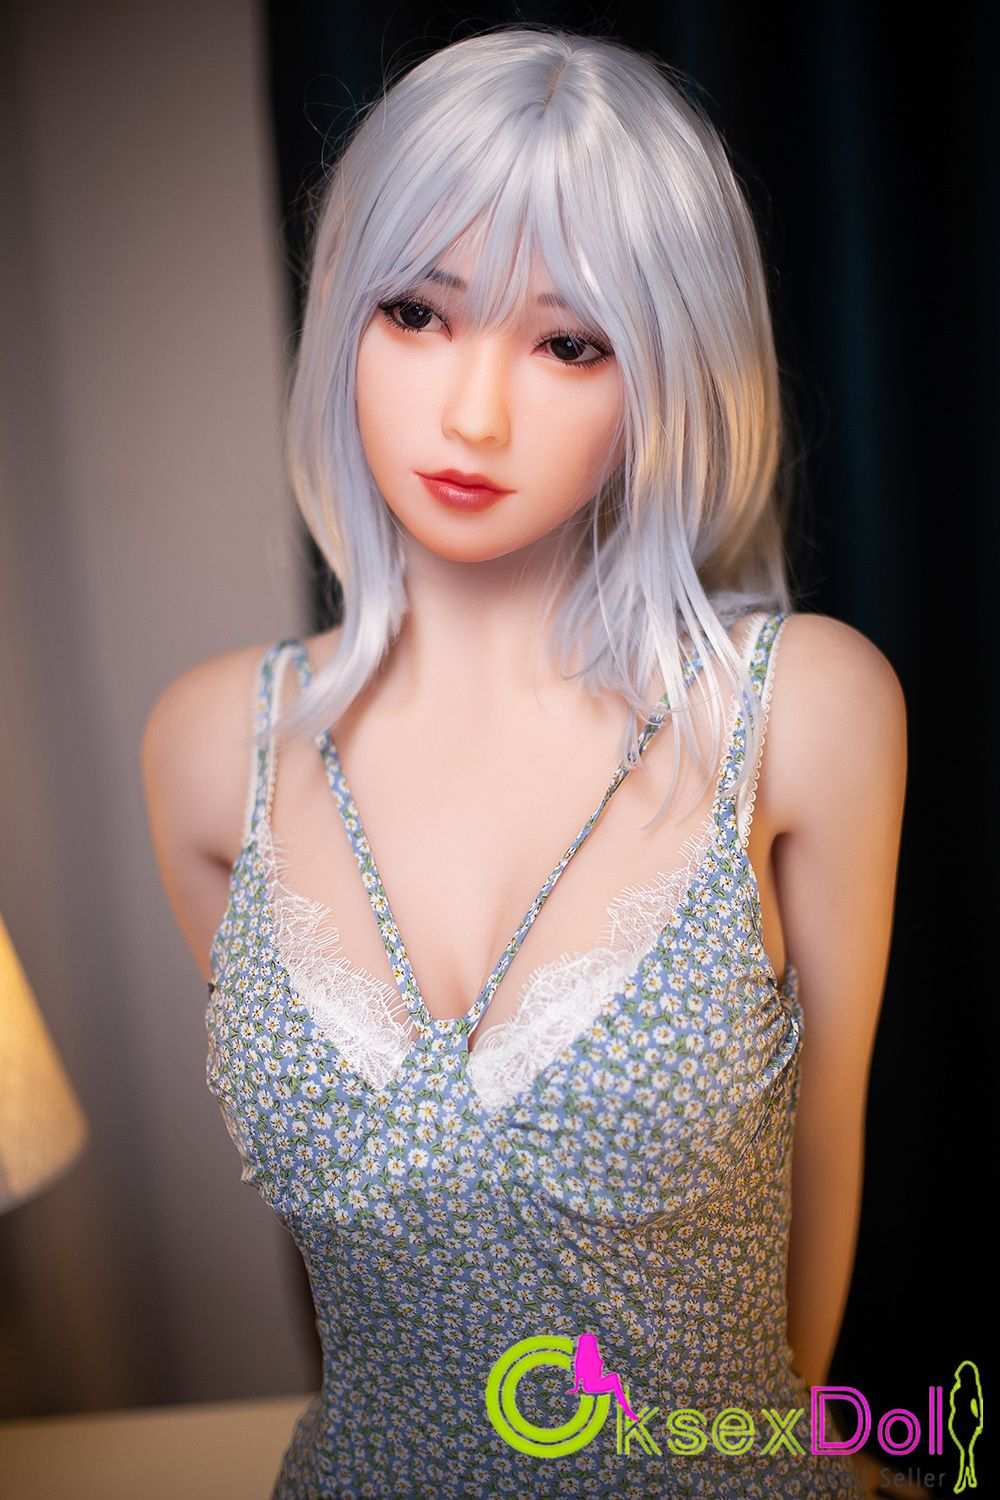 Skinny Sex Doll Pics of Mihoko